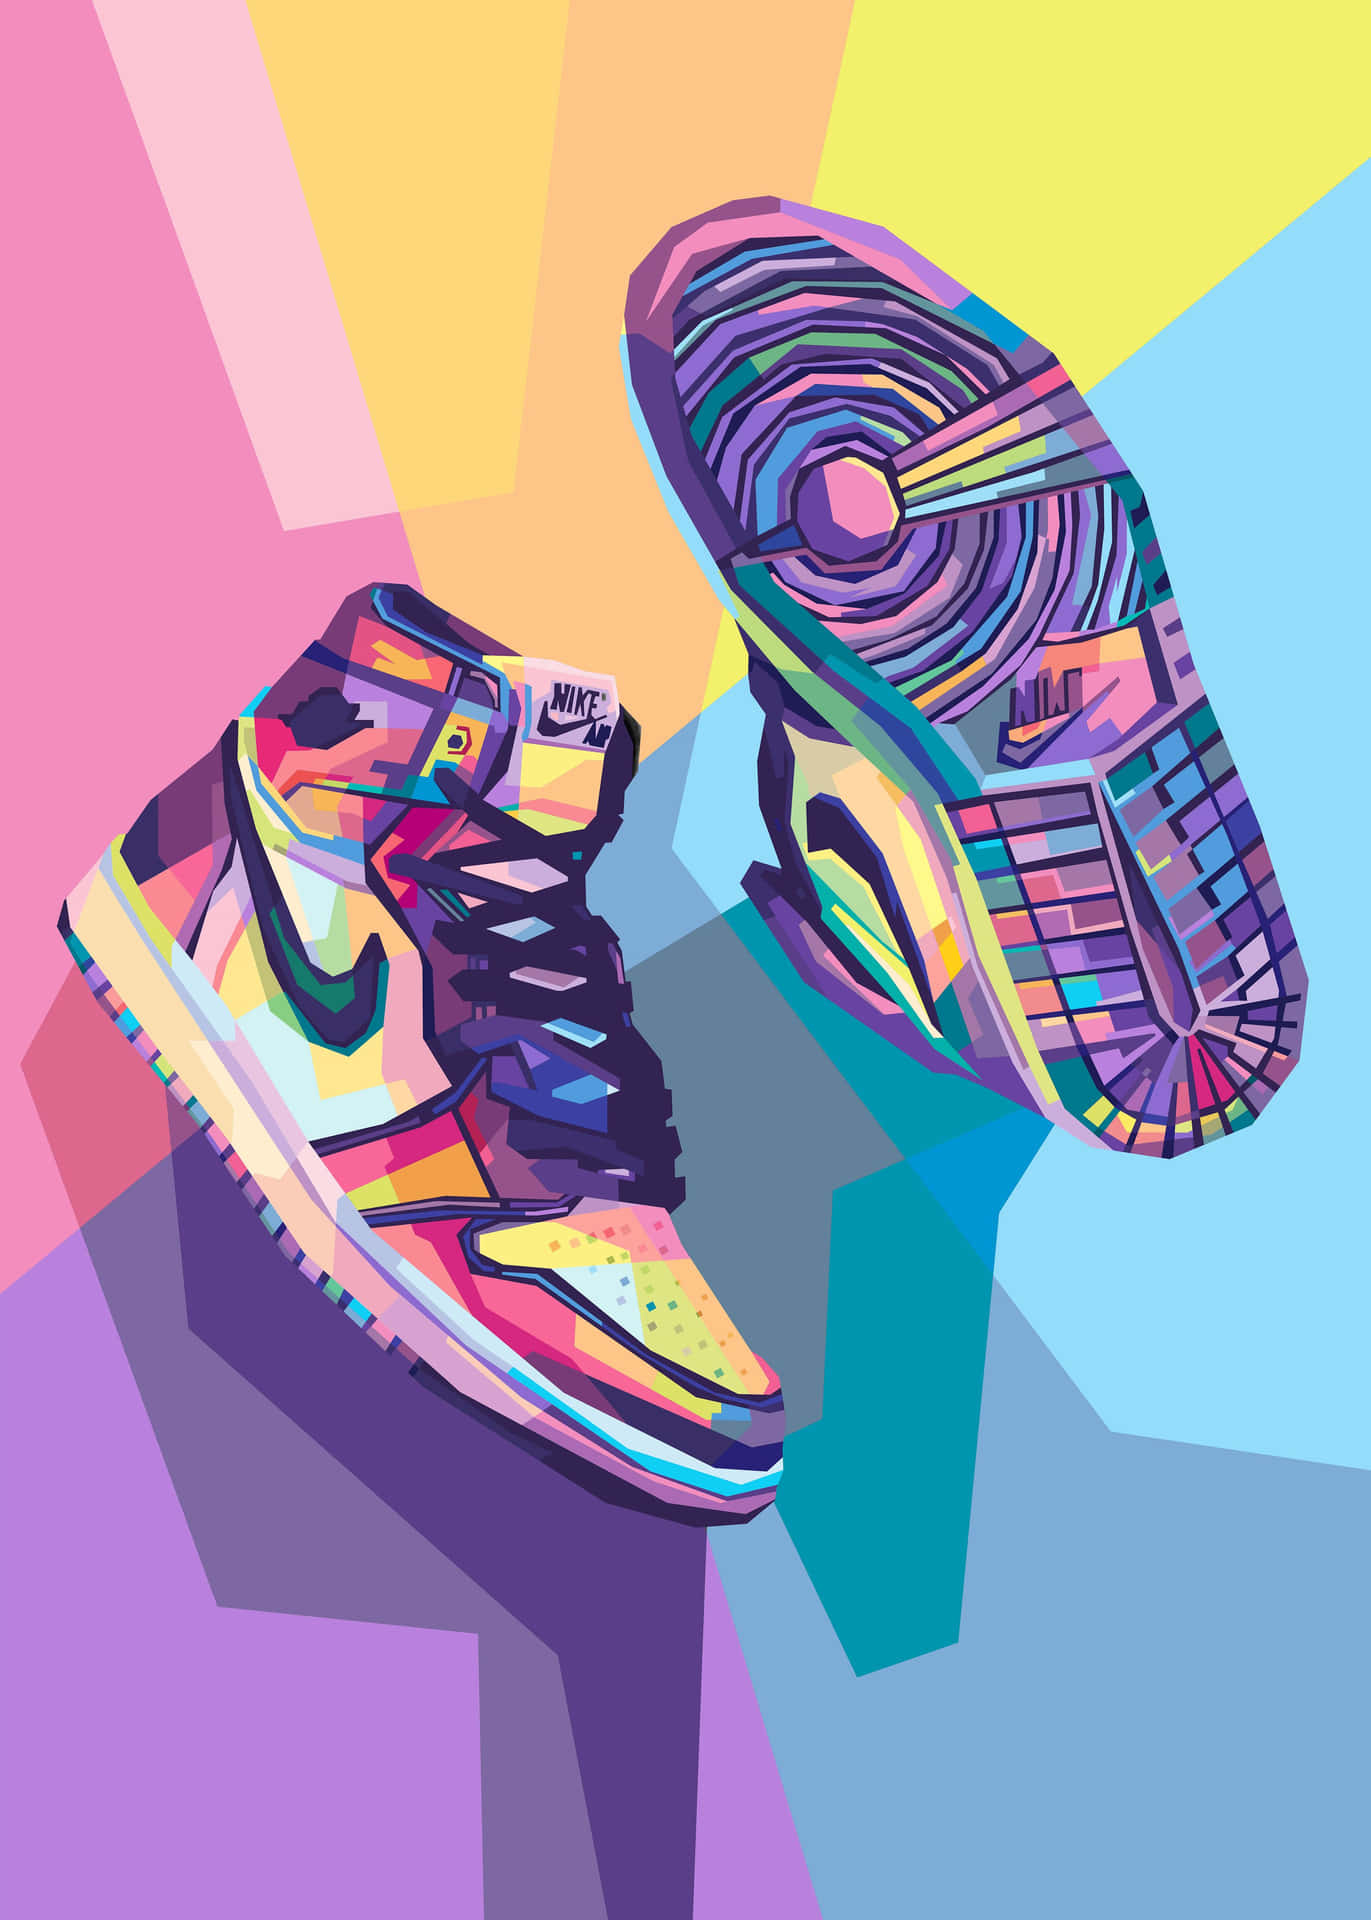 Buntenike Jordan Schuhe Wallpaper